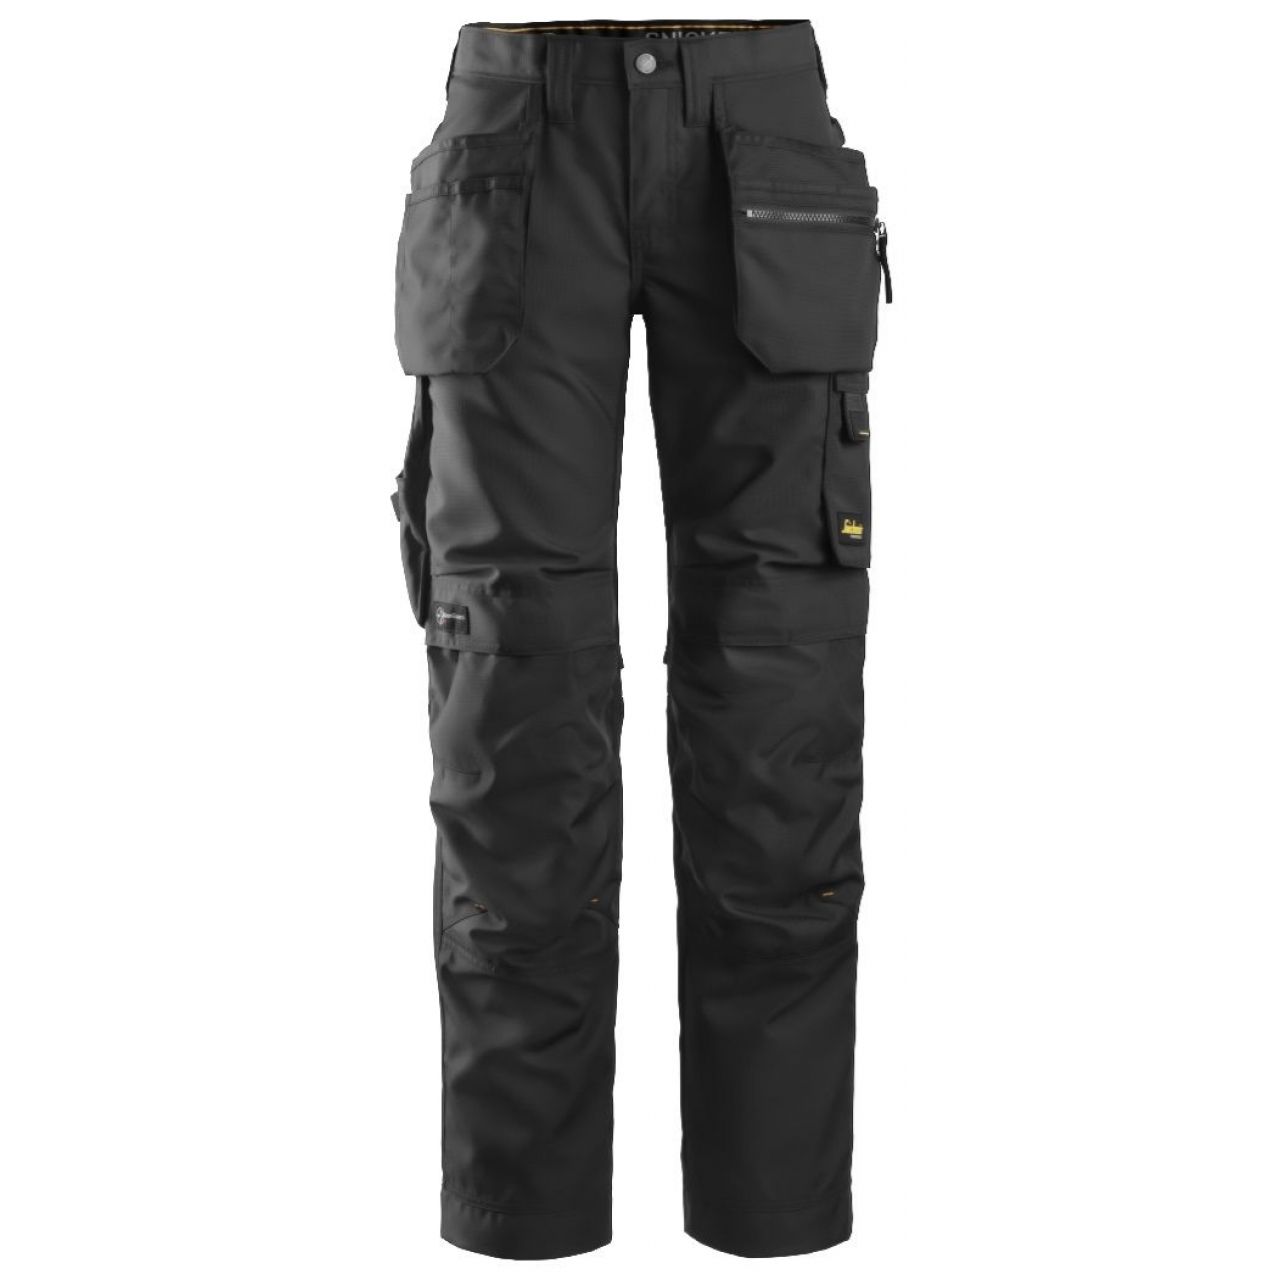 Pantalon de mujer AllroundWork+ con bolsillos flotantes negro talla 019